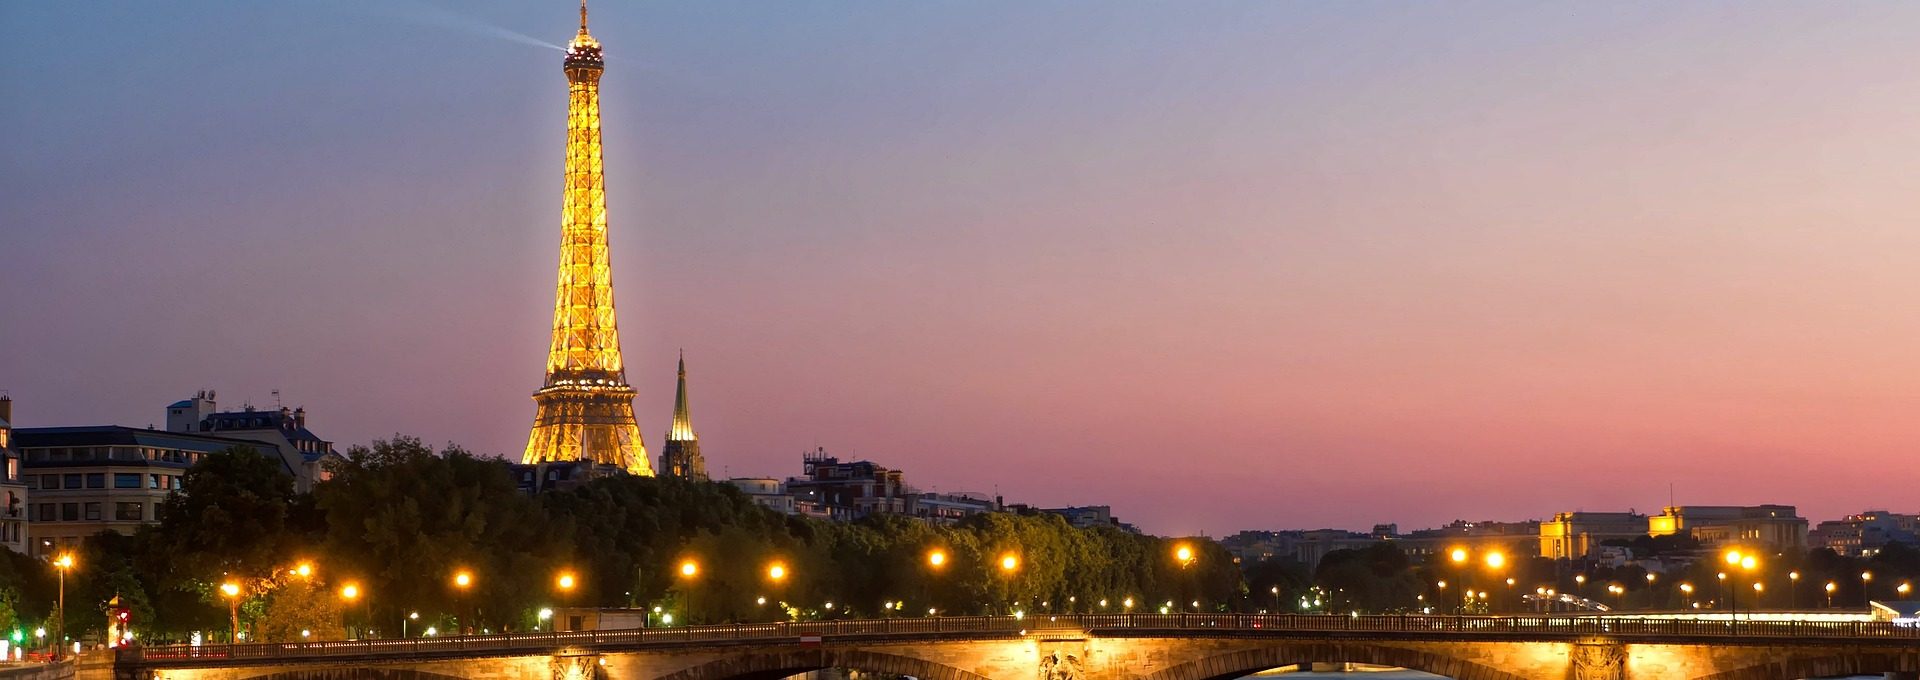 Torre Eiffel em Paris iluminada à noite